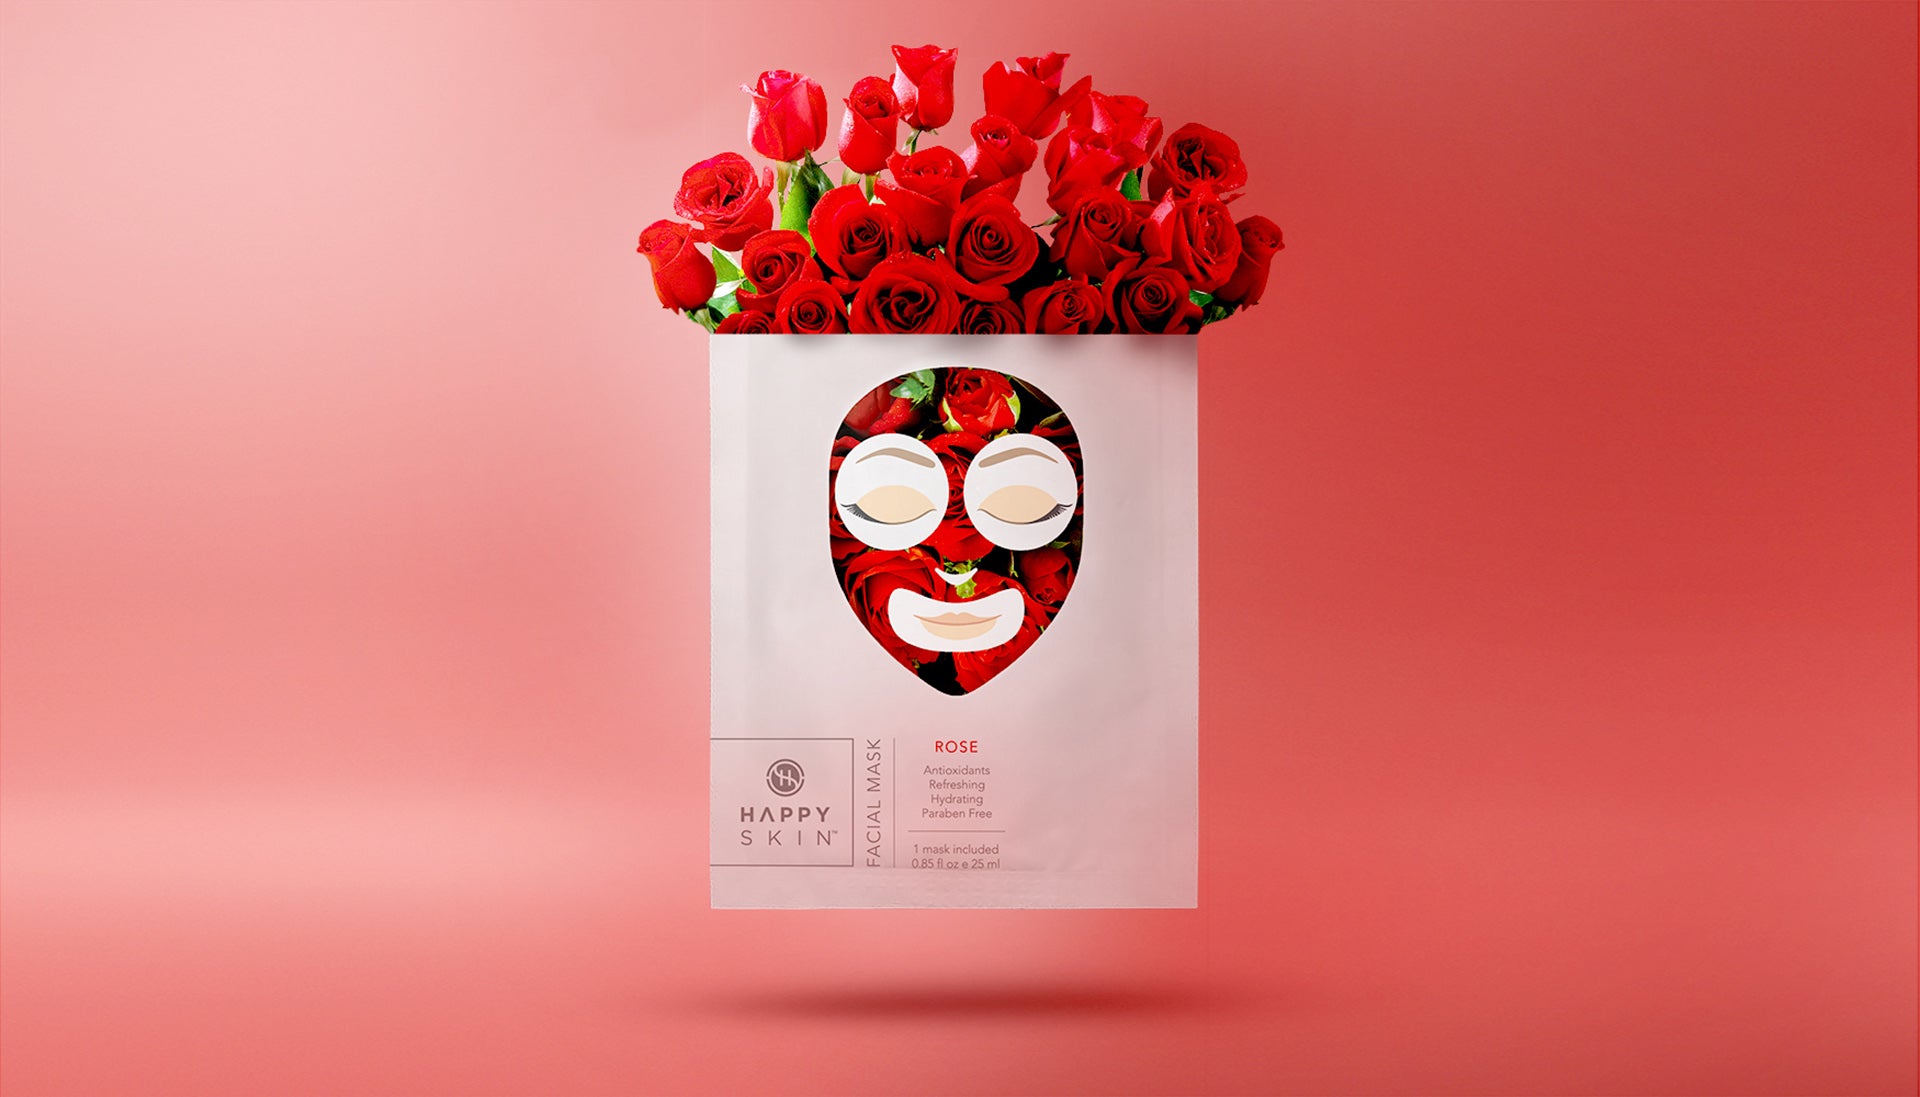 Happy Skin Facial Sheet Mask Rose - GlamShopTN